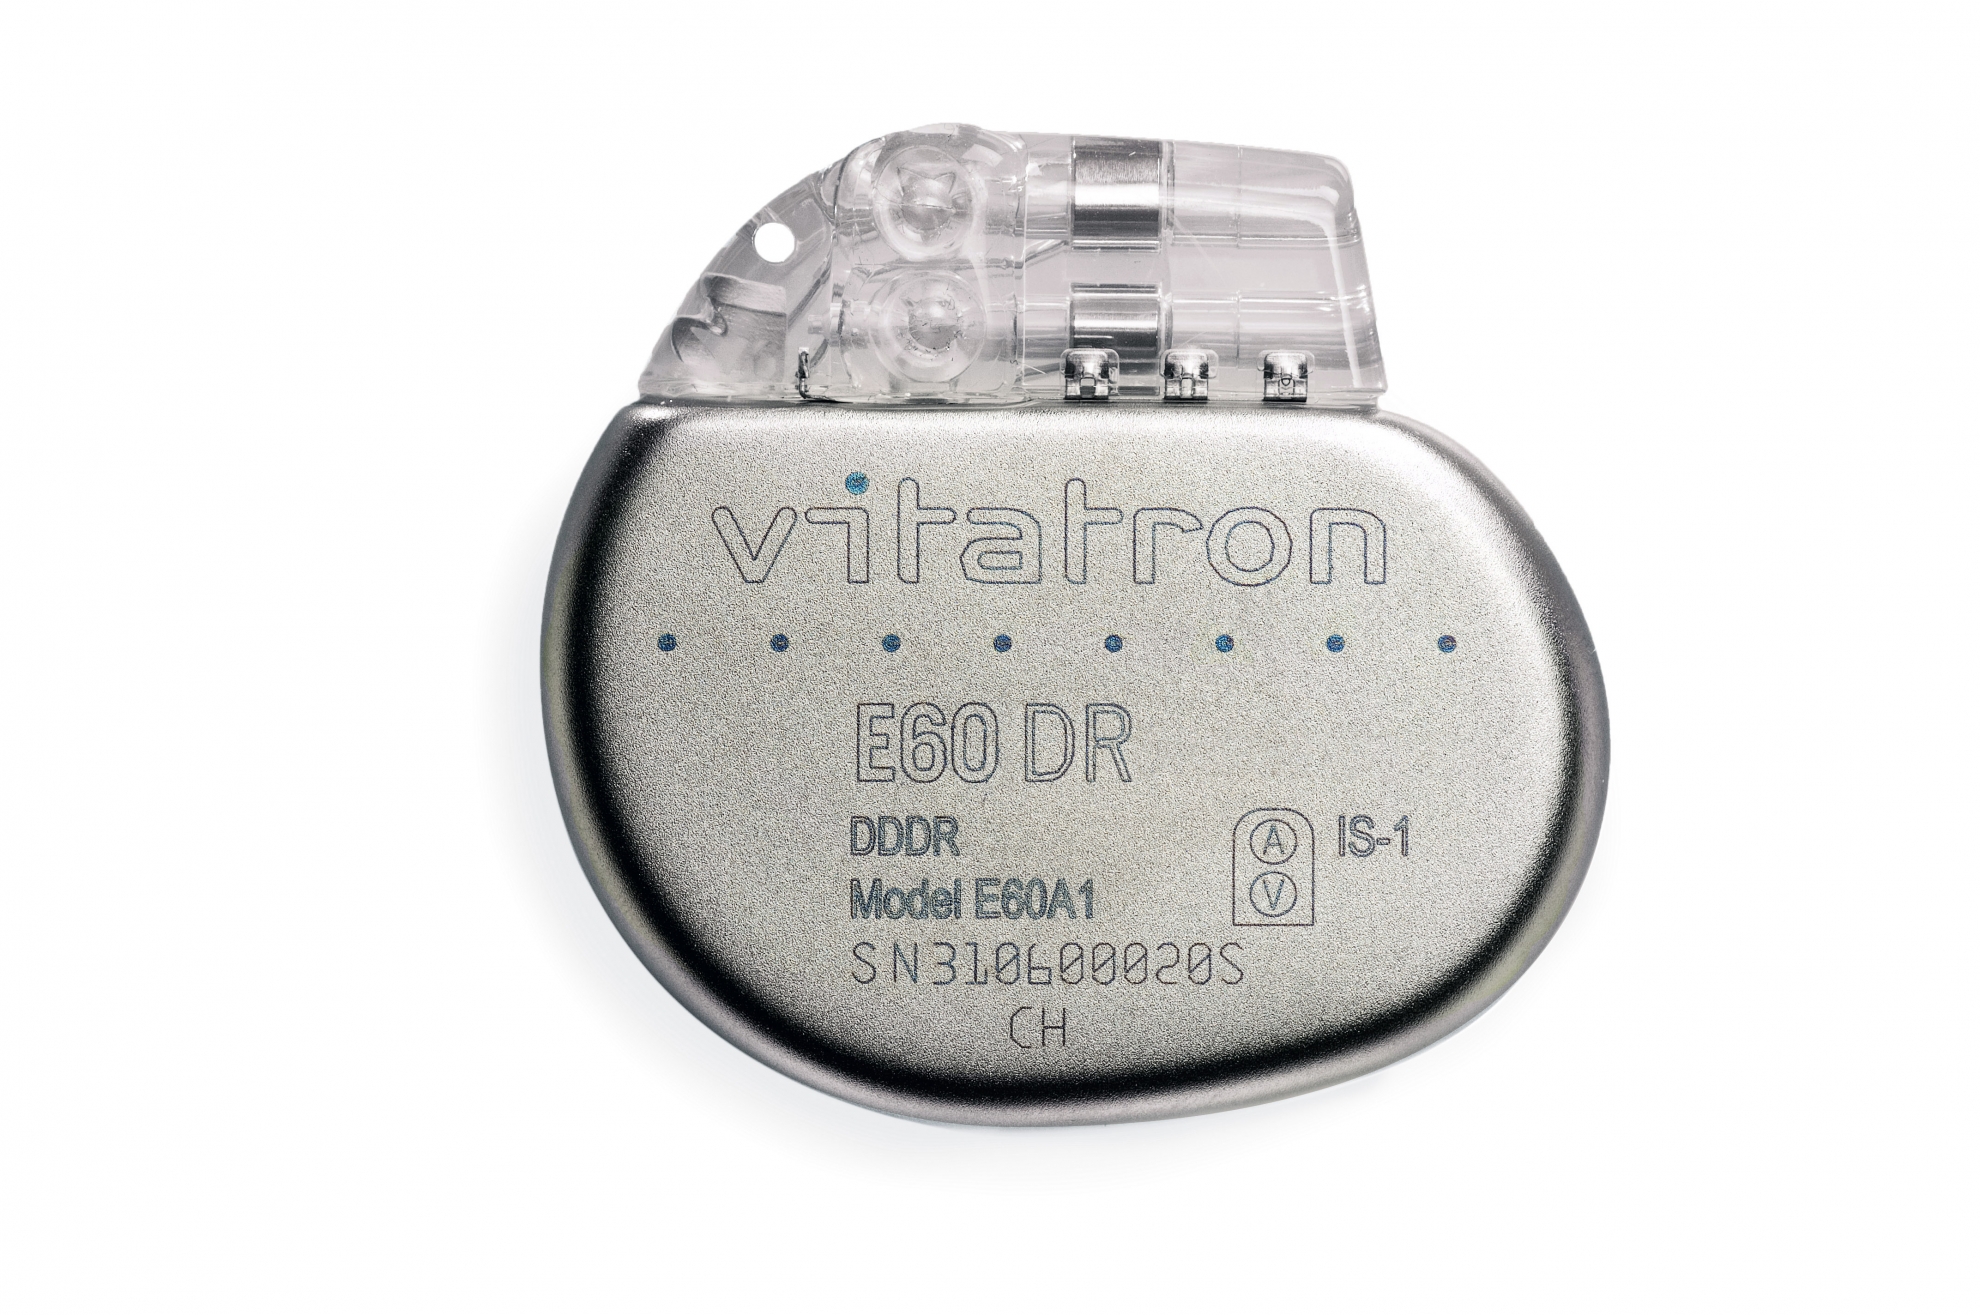 Vitatron E60DR